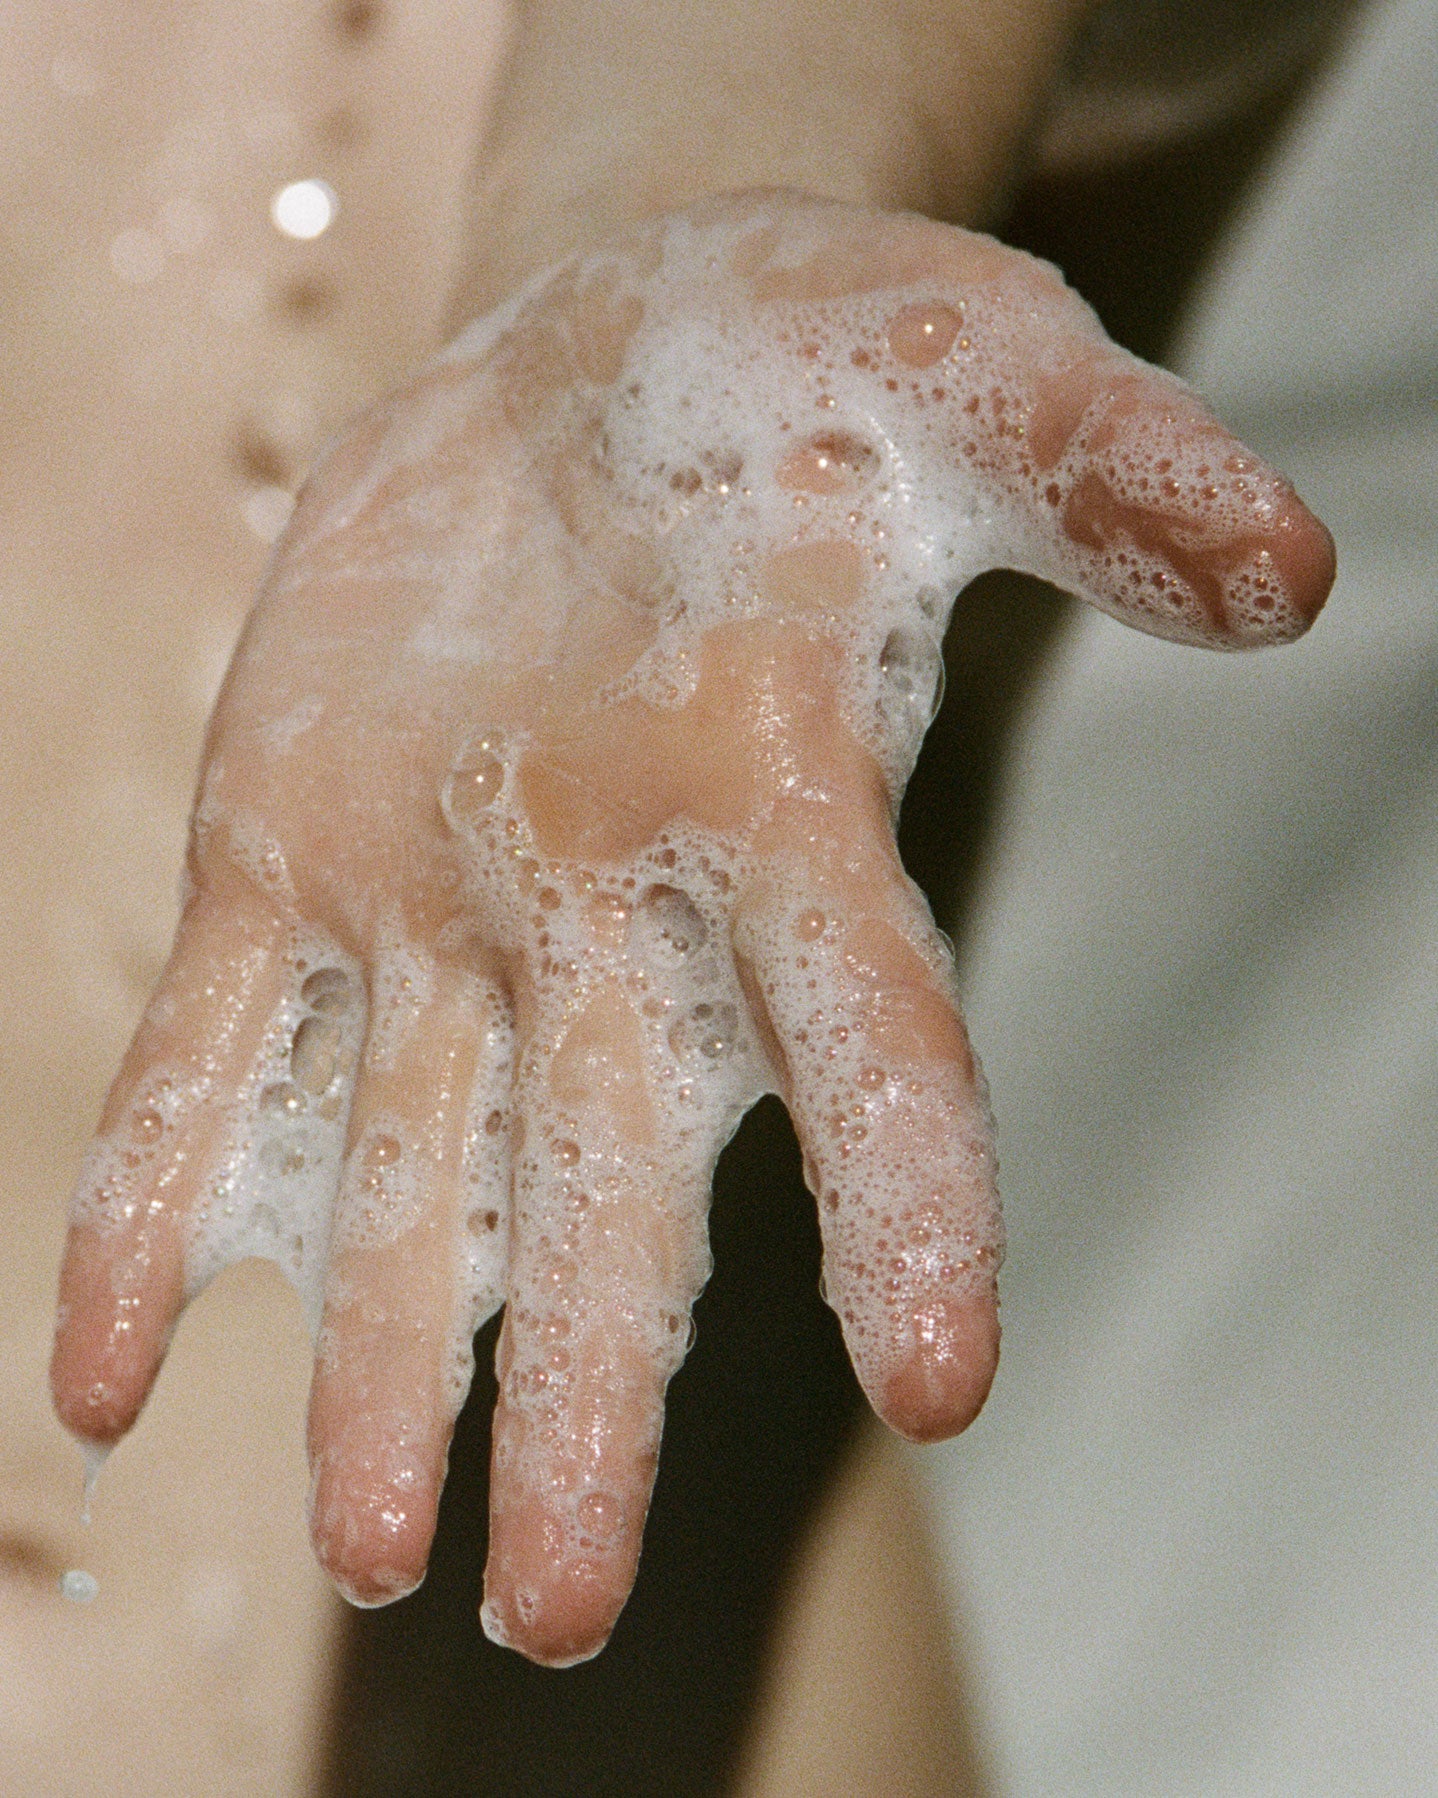 104 Refill Hand & Body wash